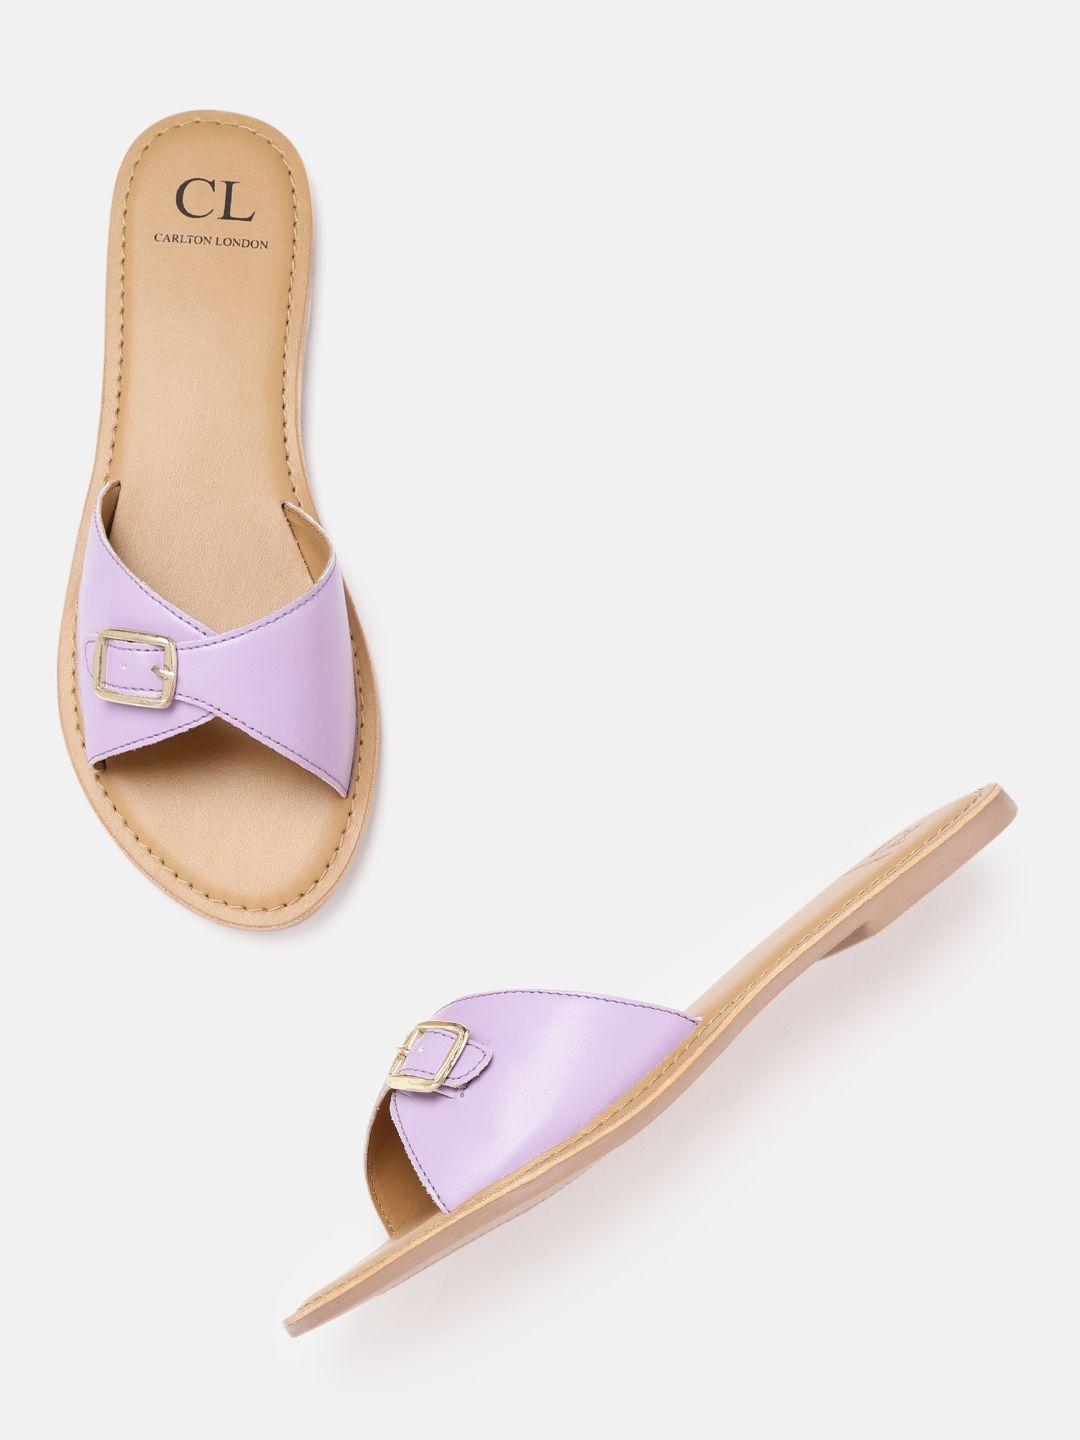 carlton london women lavender open toe flats with buckle detail